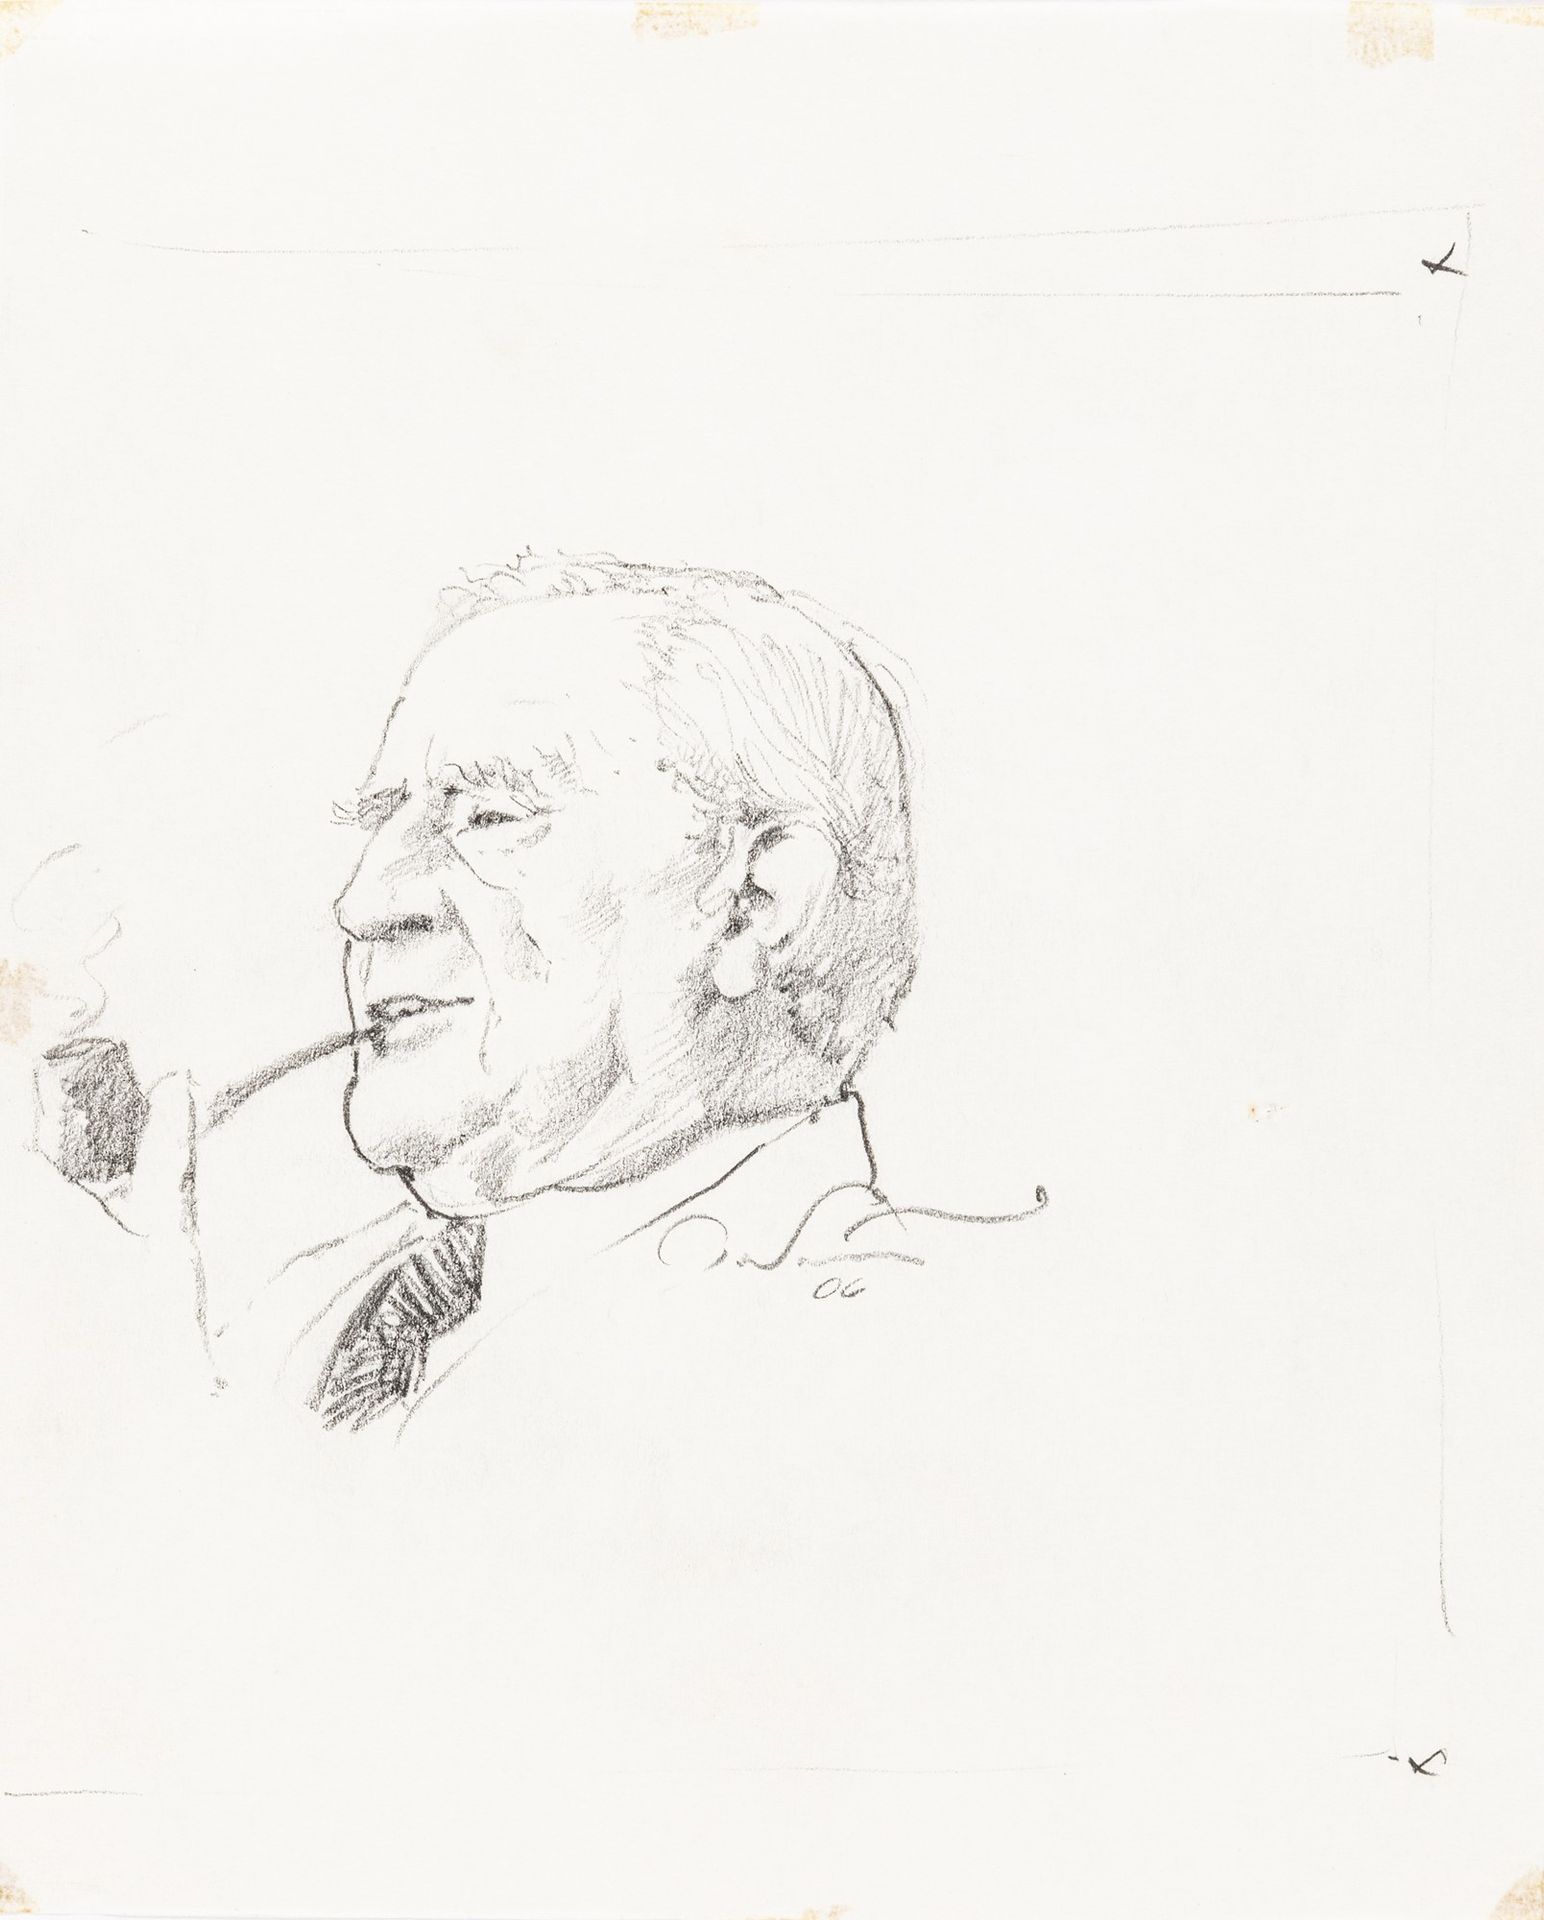 Ted Nasmith J.R.R.托尔金，2006

纸上铅笔
25,5 x 31 cm
纳斯密斯在2006年绘制的原画。托尔金最引人注目的画像之一。签名和日&hellip;